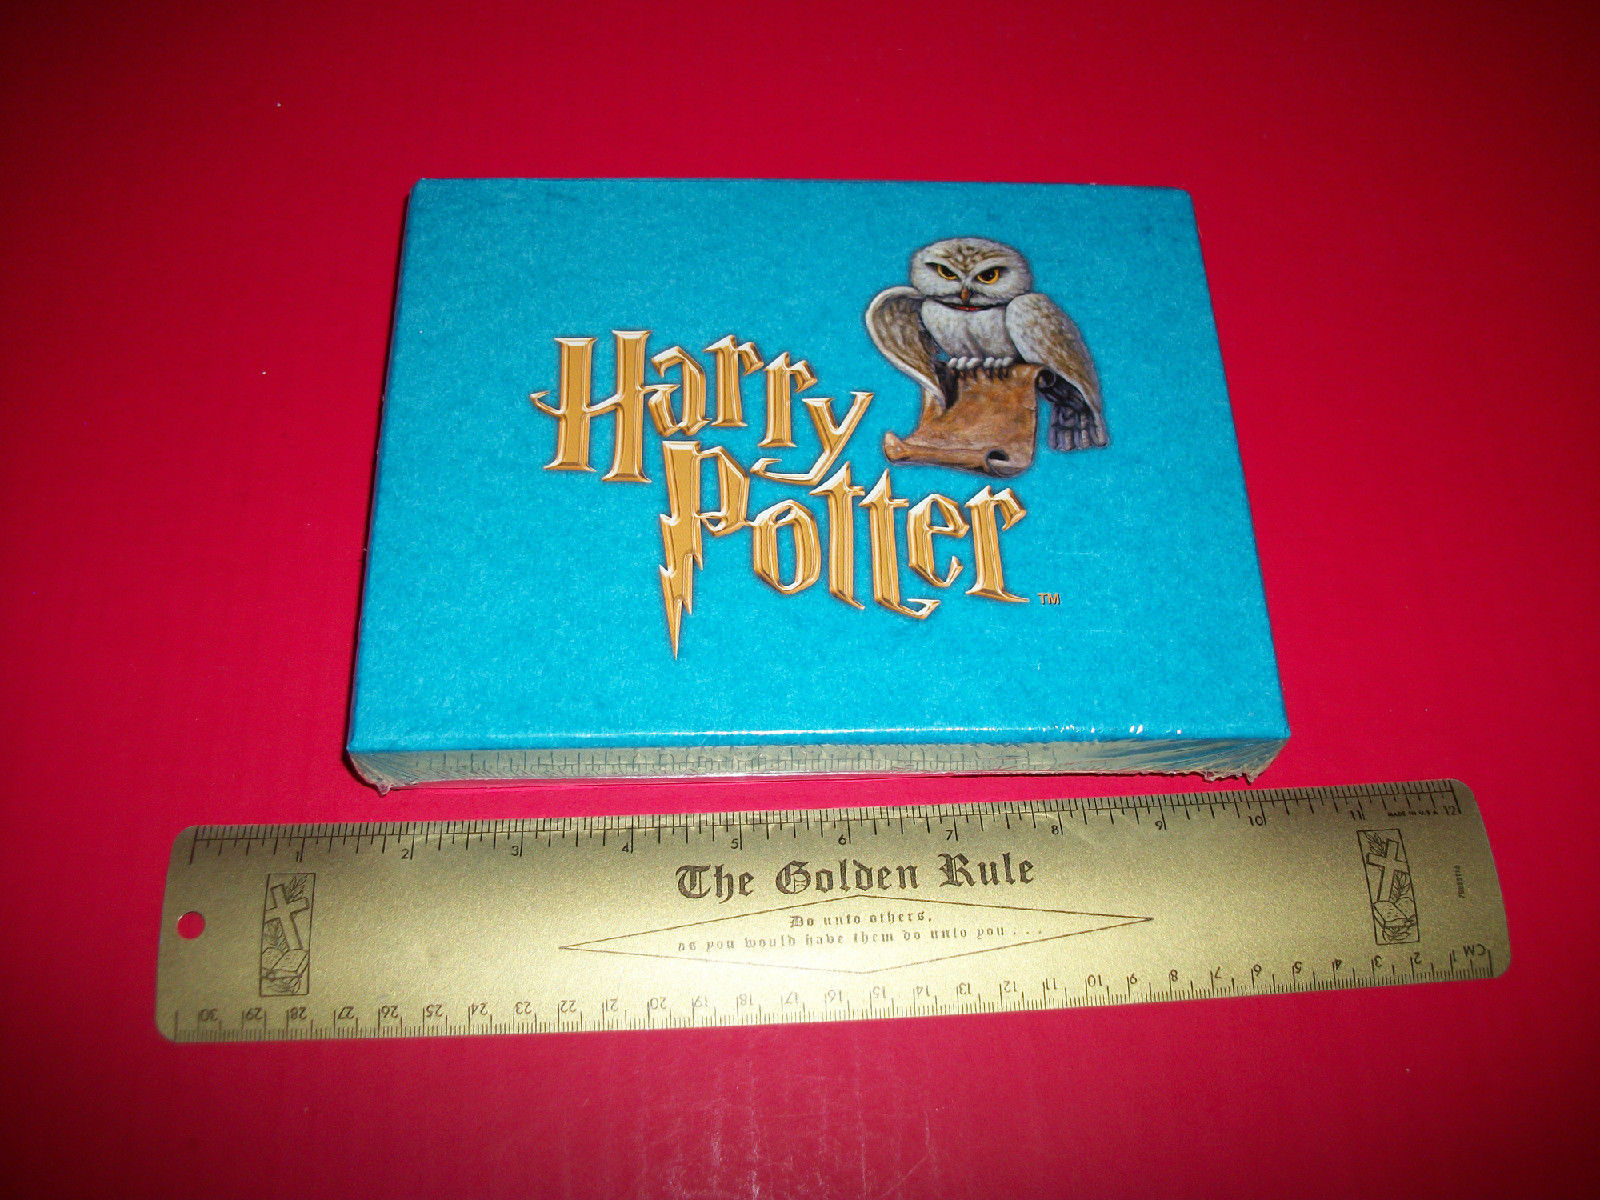 Harry Potter Craft Kit Paper Scholastic Stationery Set Box Address Book Stickers - $10.44